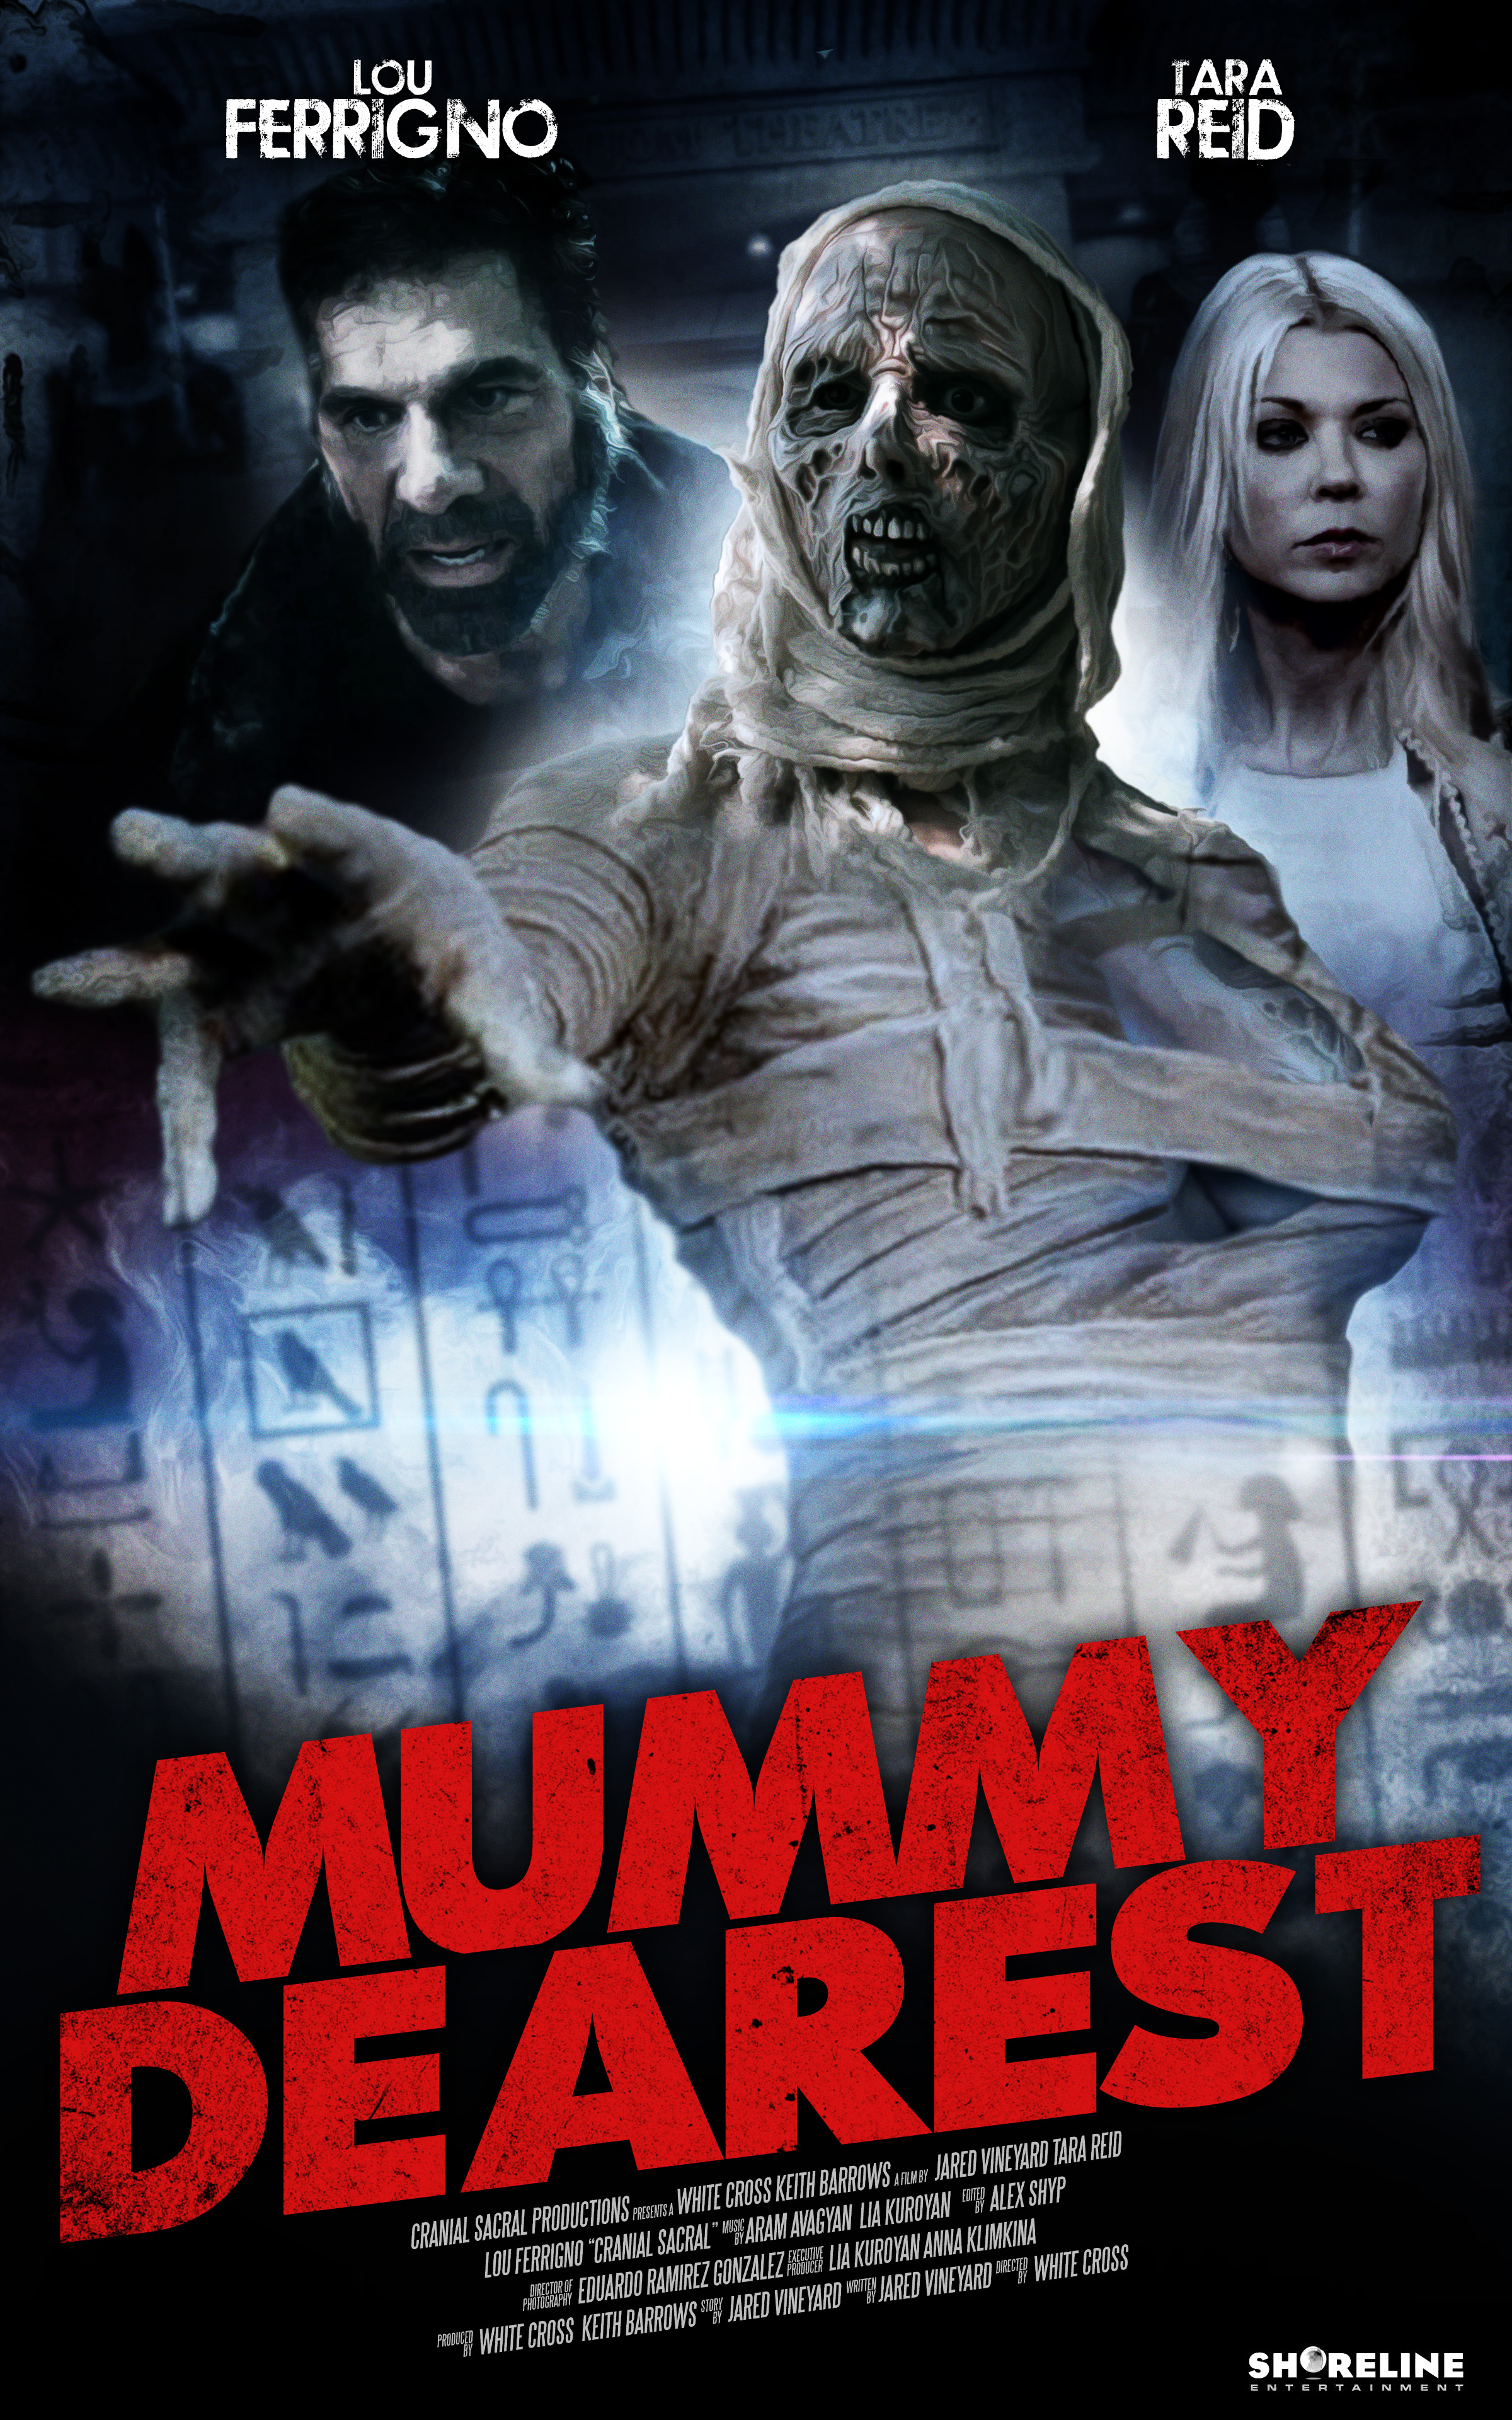 Nonton film Mummy Dearest layarkaca21 indoxx1 ganool online streaming terbaru